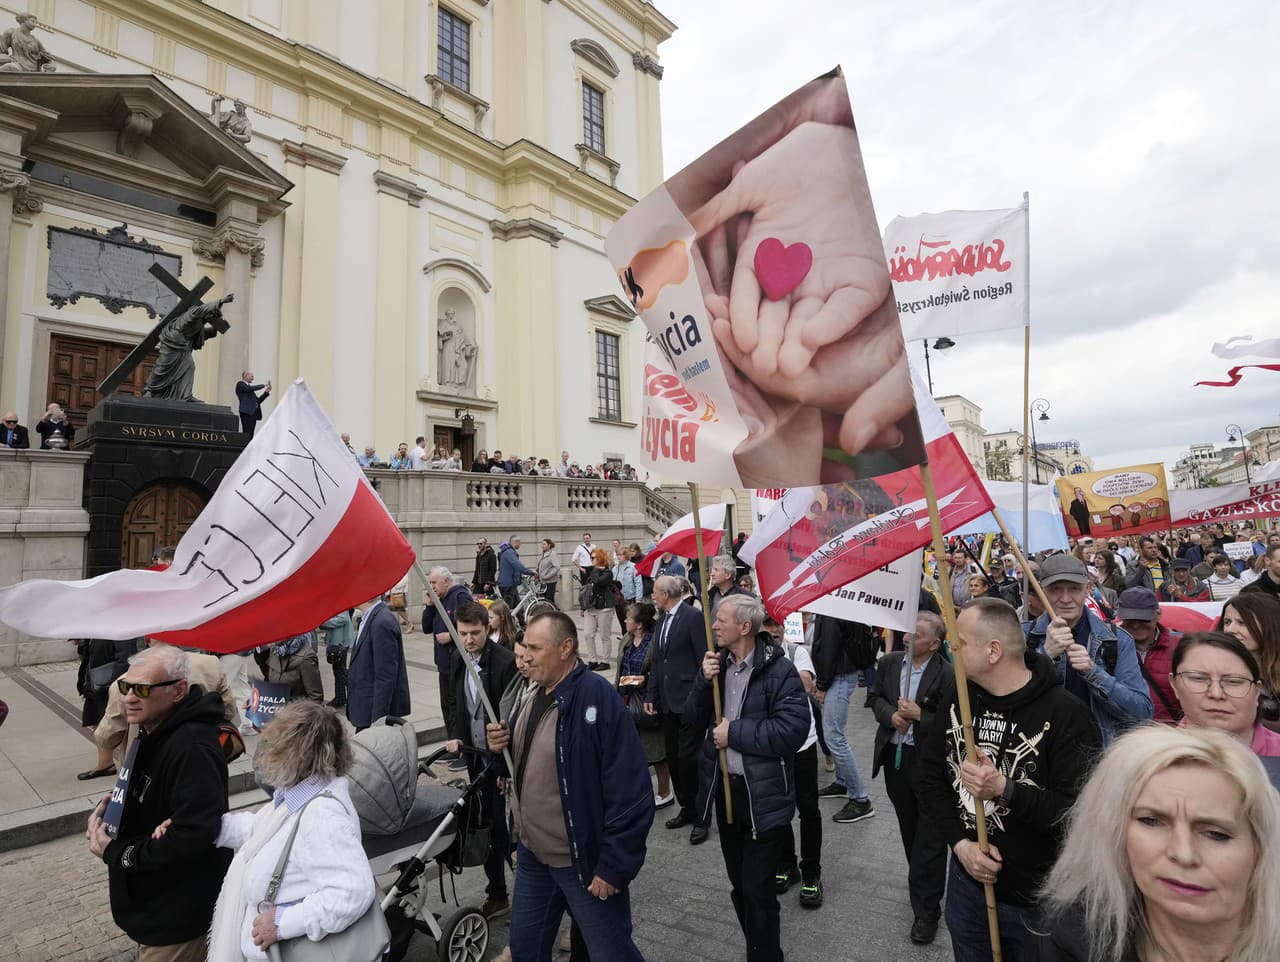 Odporcovia liberalizácie interrupcií v Poľsku vyšli do ulíc Varšavy